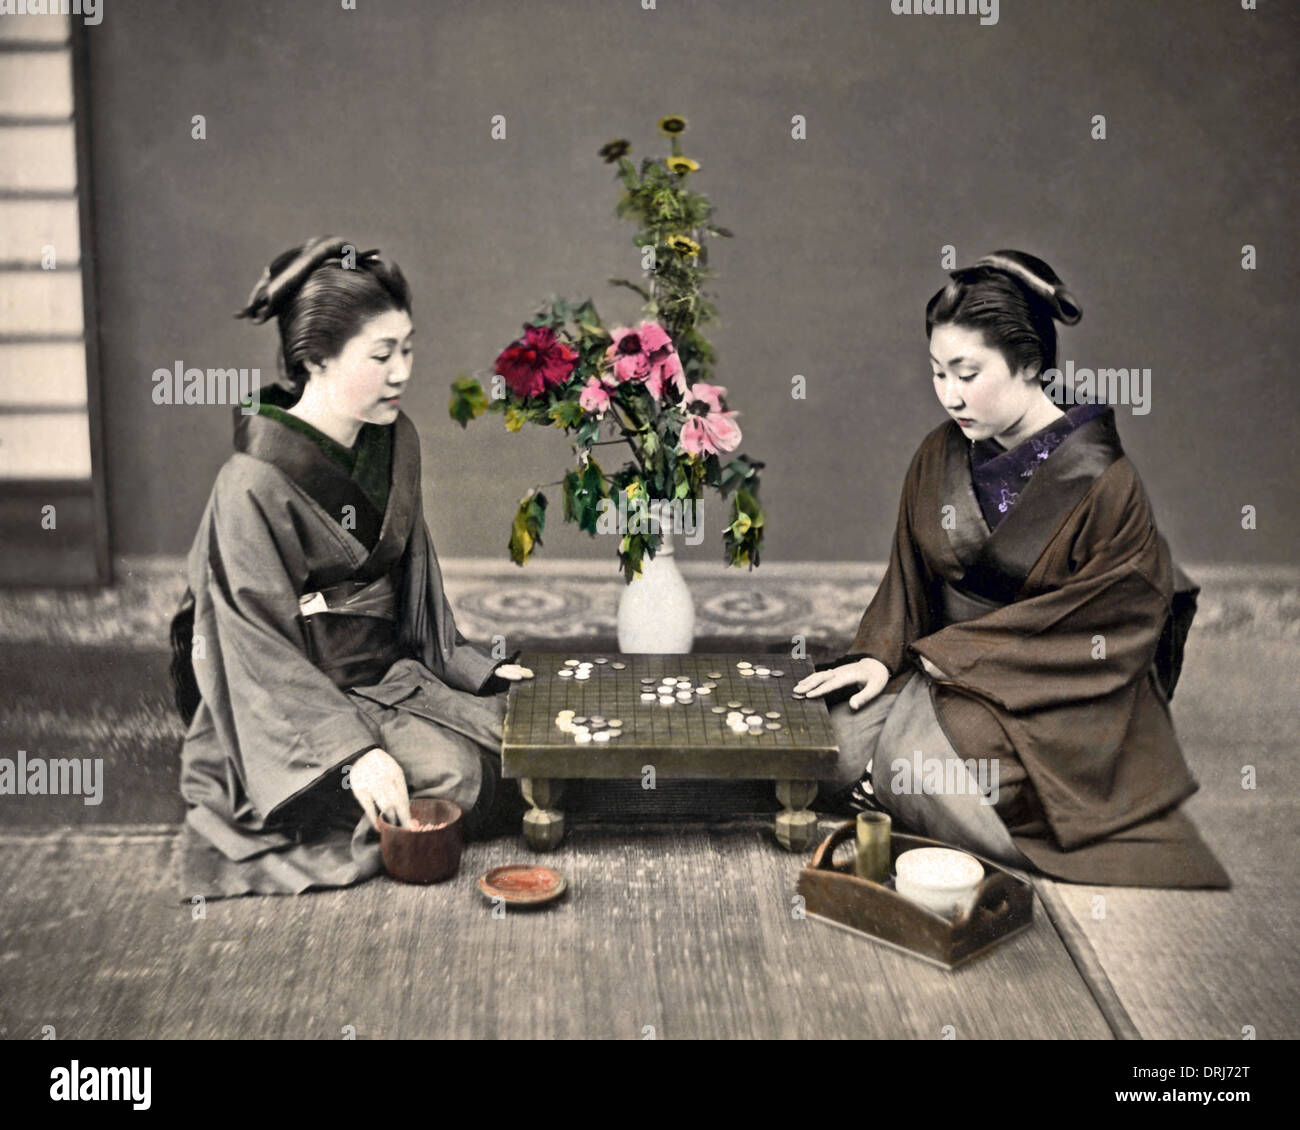 Two women playing board game, Japan Stock Photo